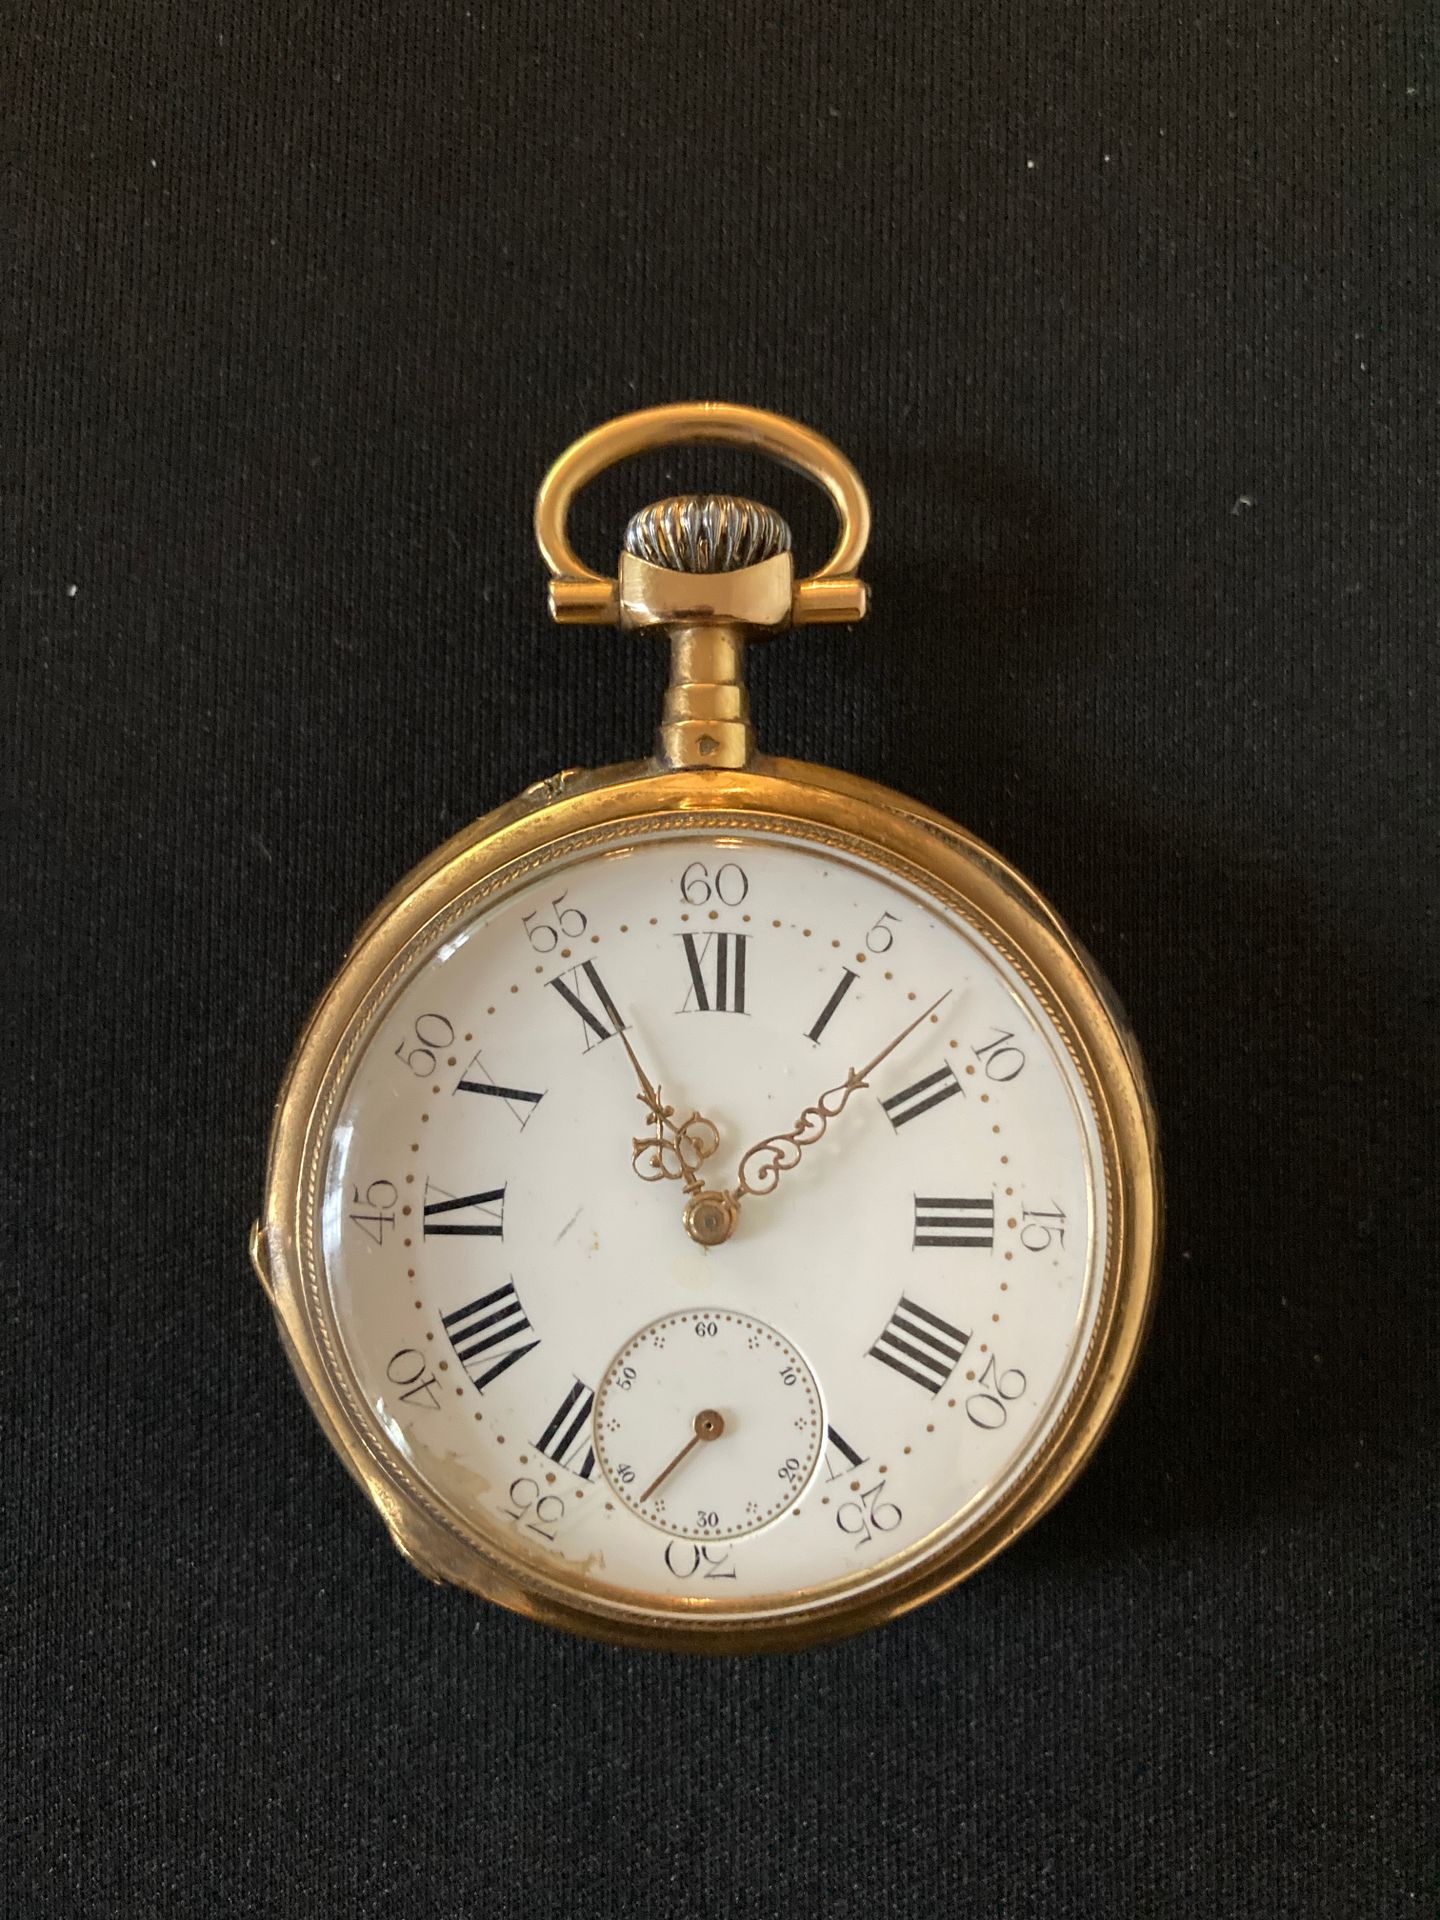 Null 宝玑手表的螺旋形结构
黄金75万分之一。
瓷质表盘上有罗马数字和小秒针。
毛重：84.7克
表盘直径：40毫米